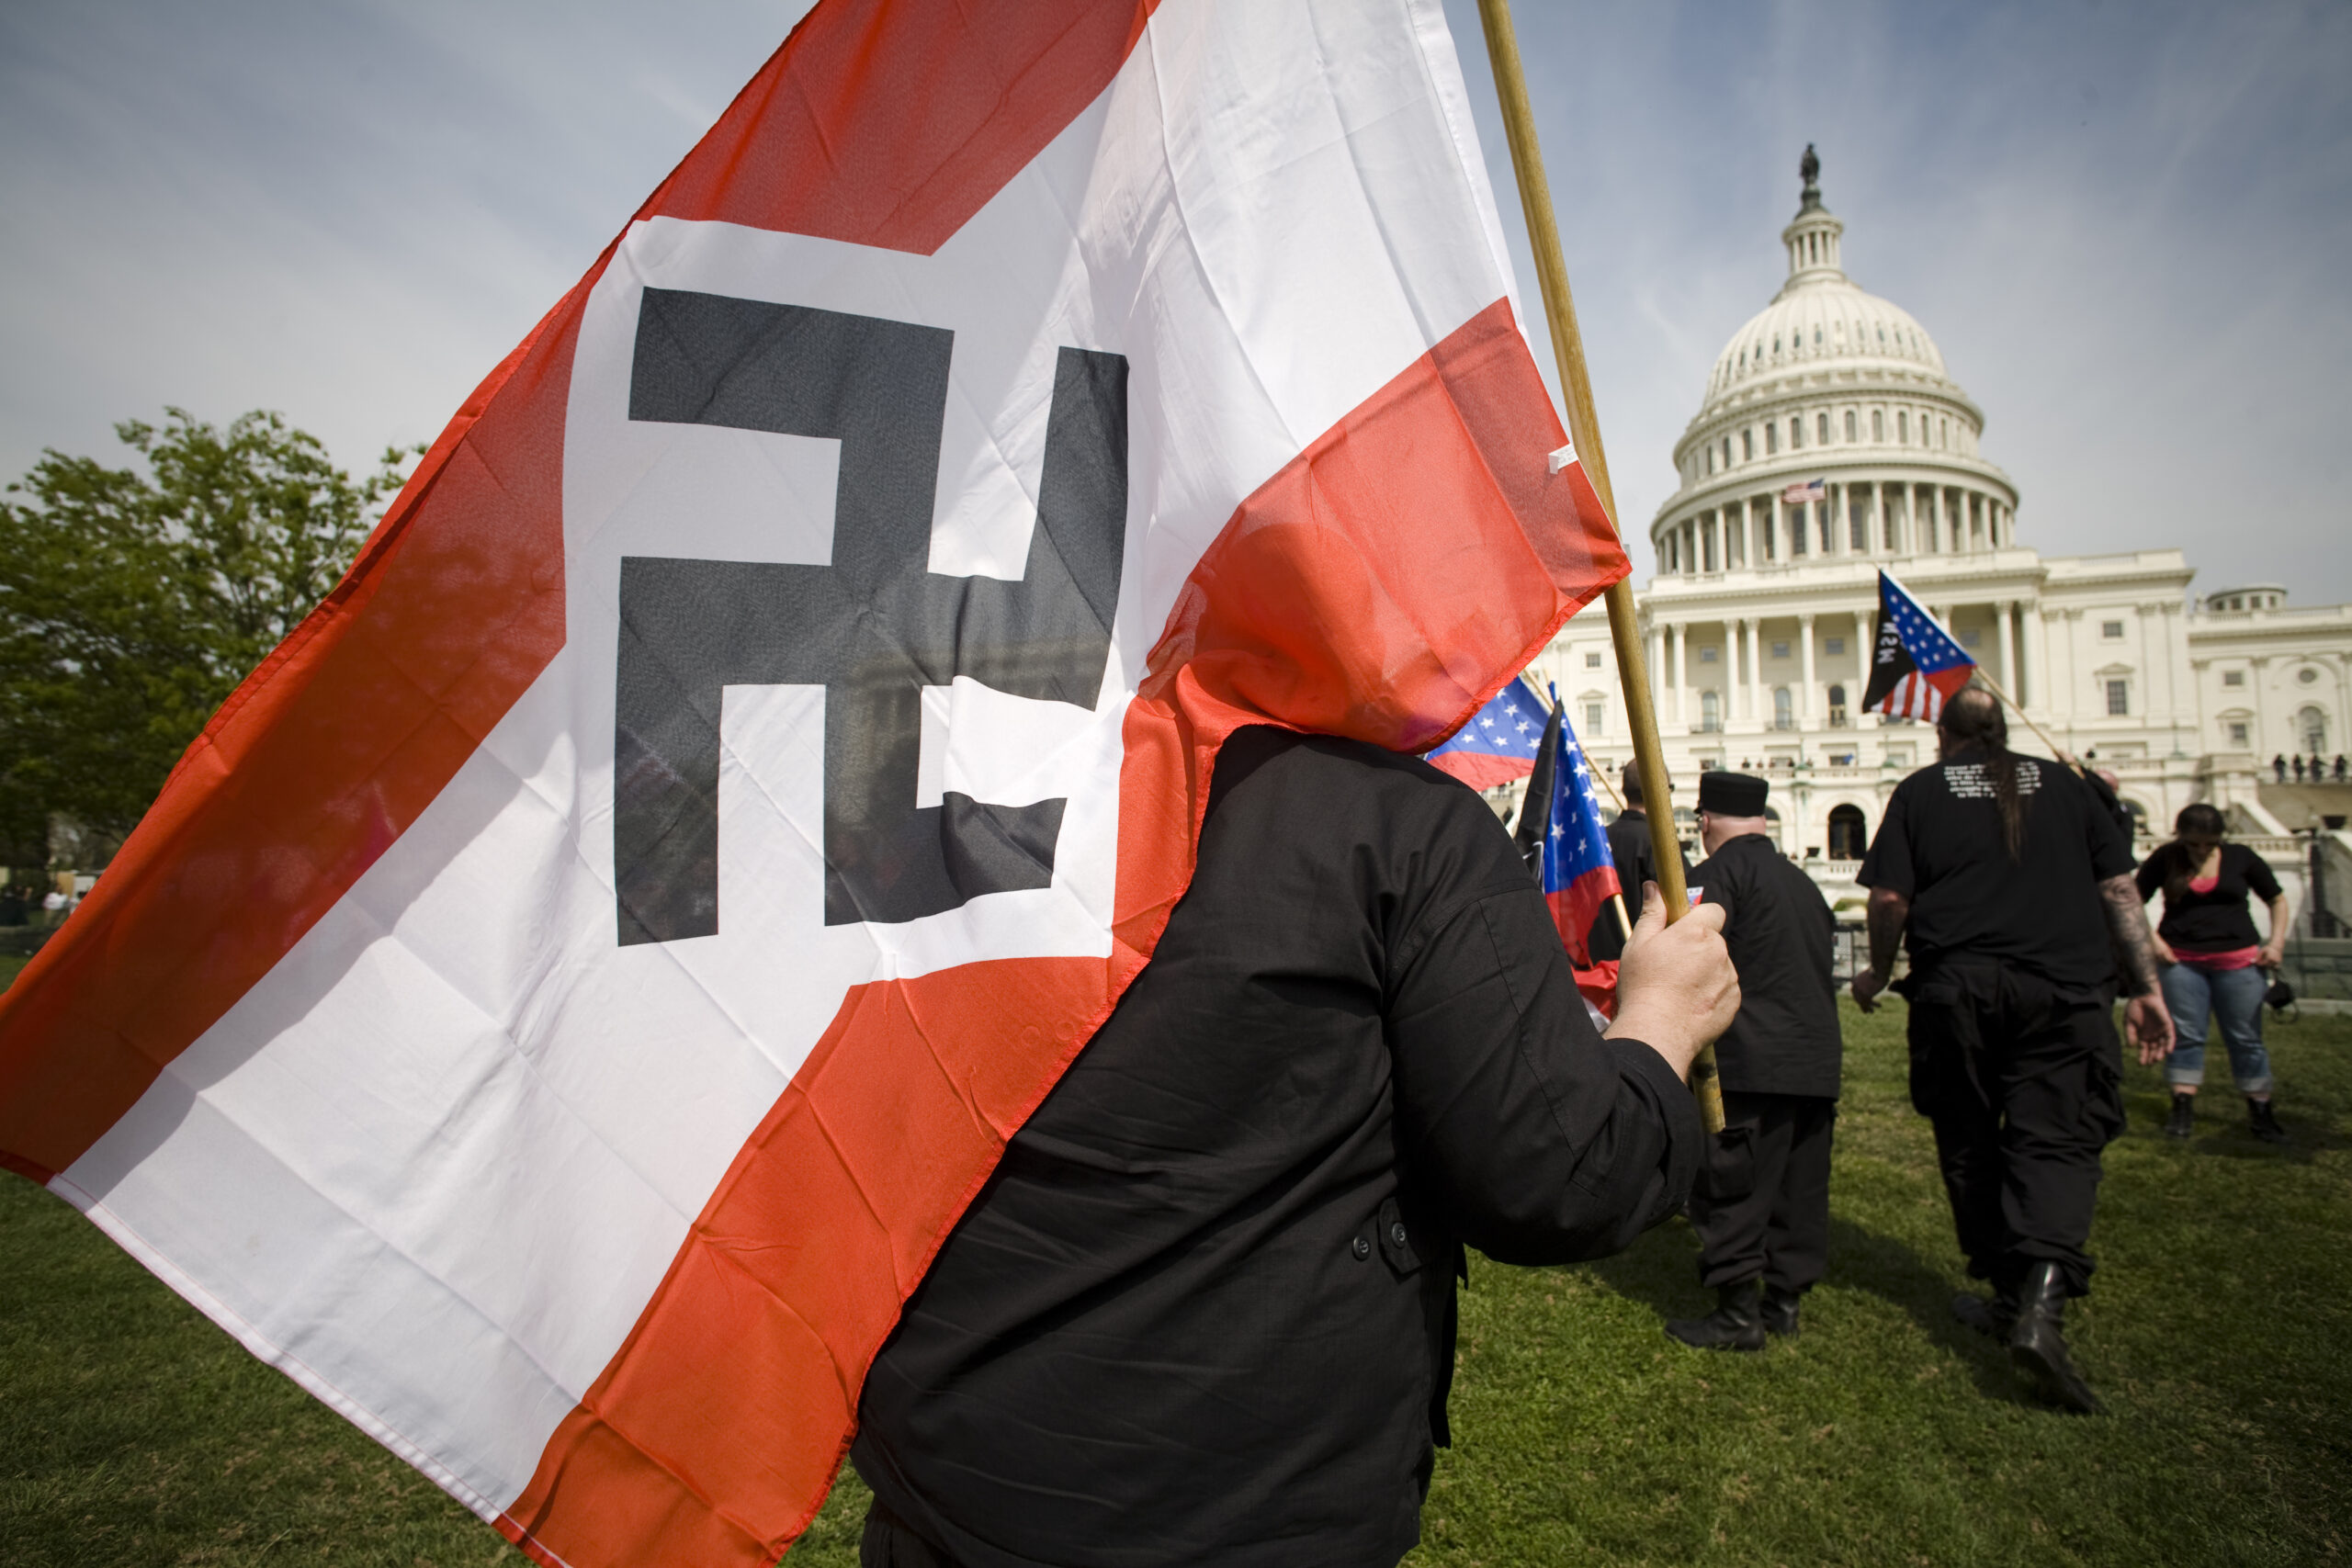 Tenacitee Unisex American Nazi Flag Sweatshirt